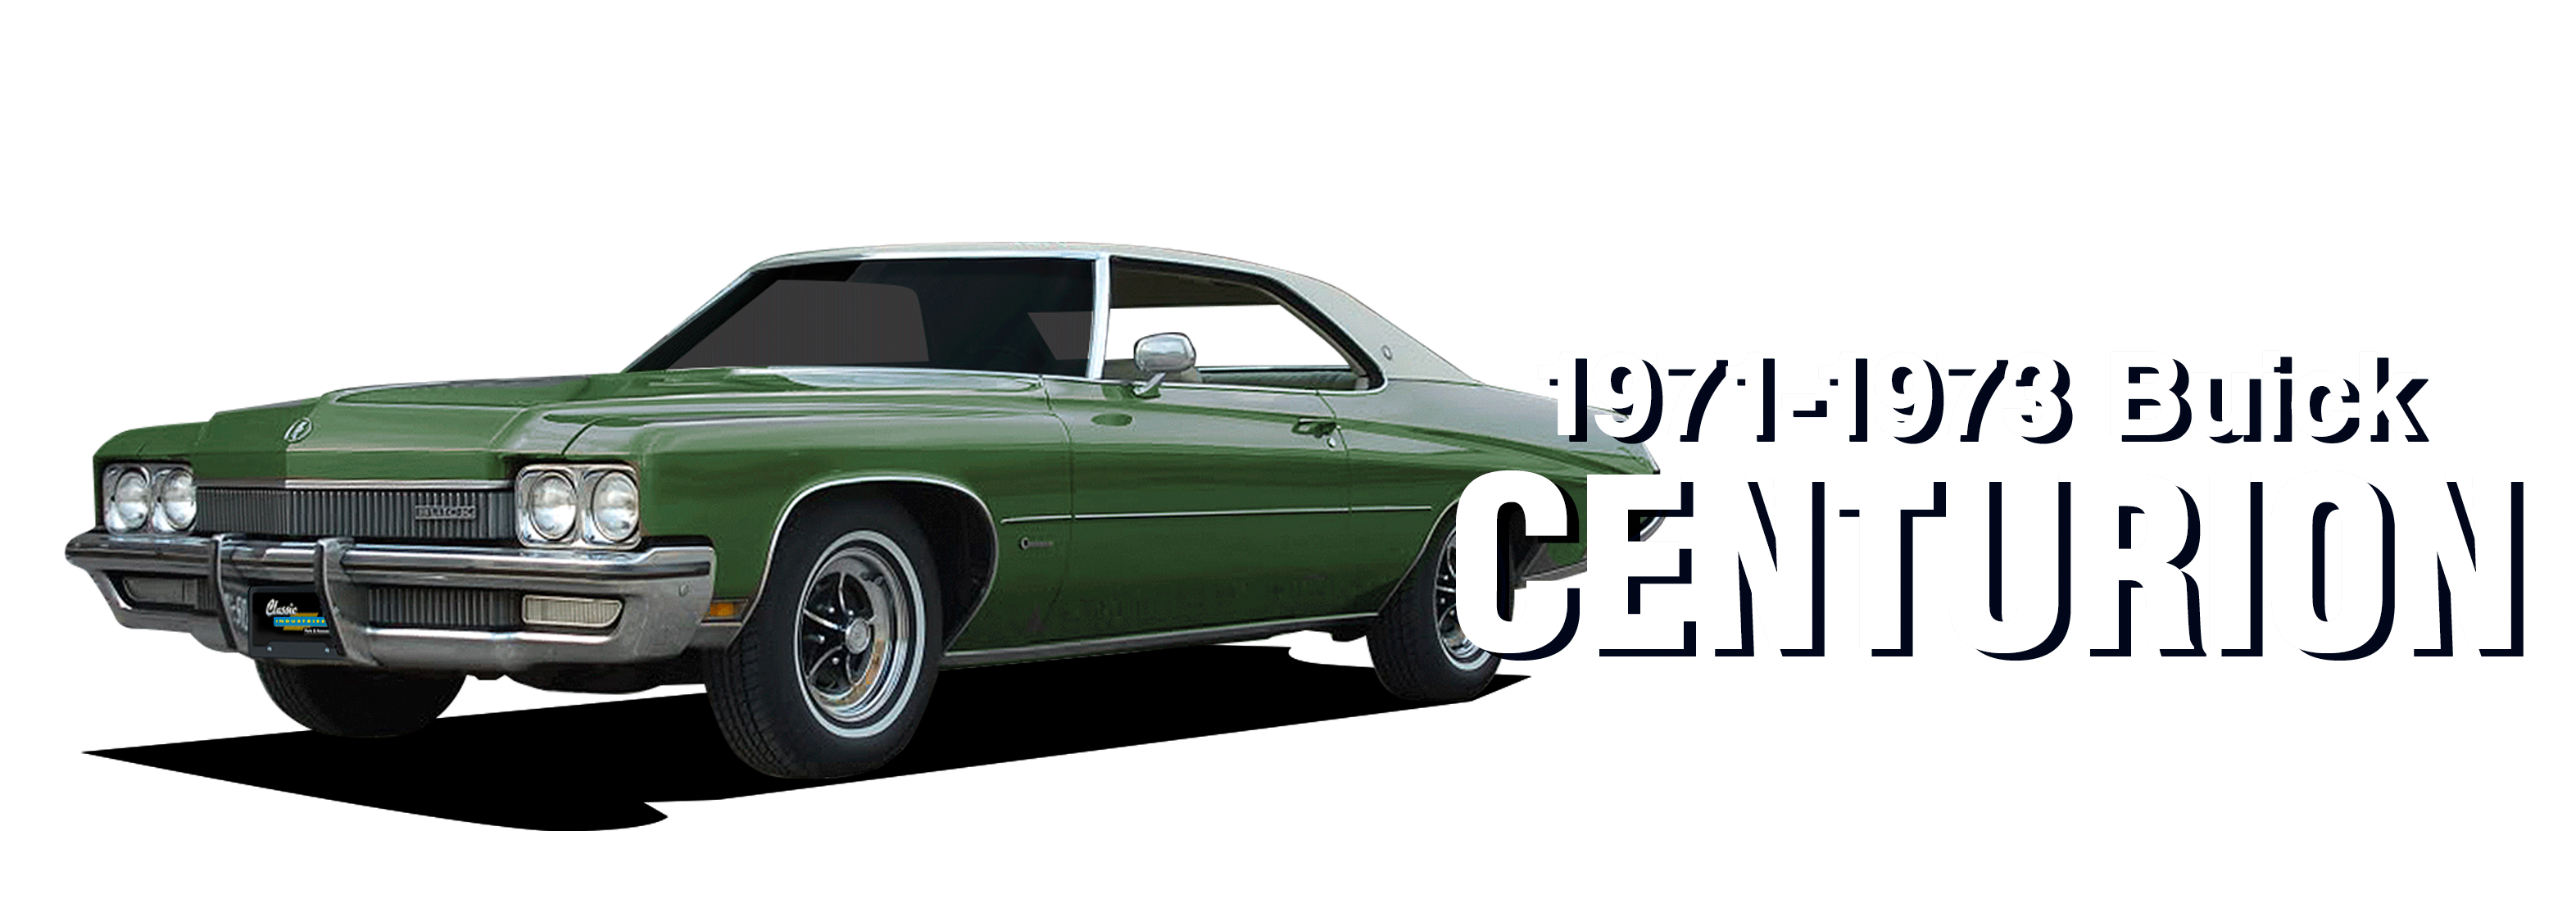 1971-1973 Buick Centurion